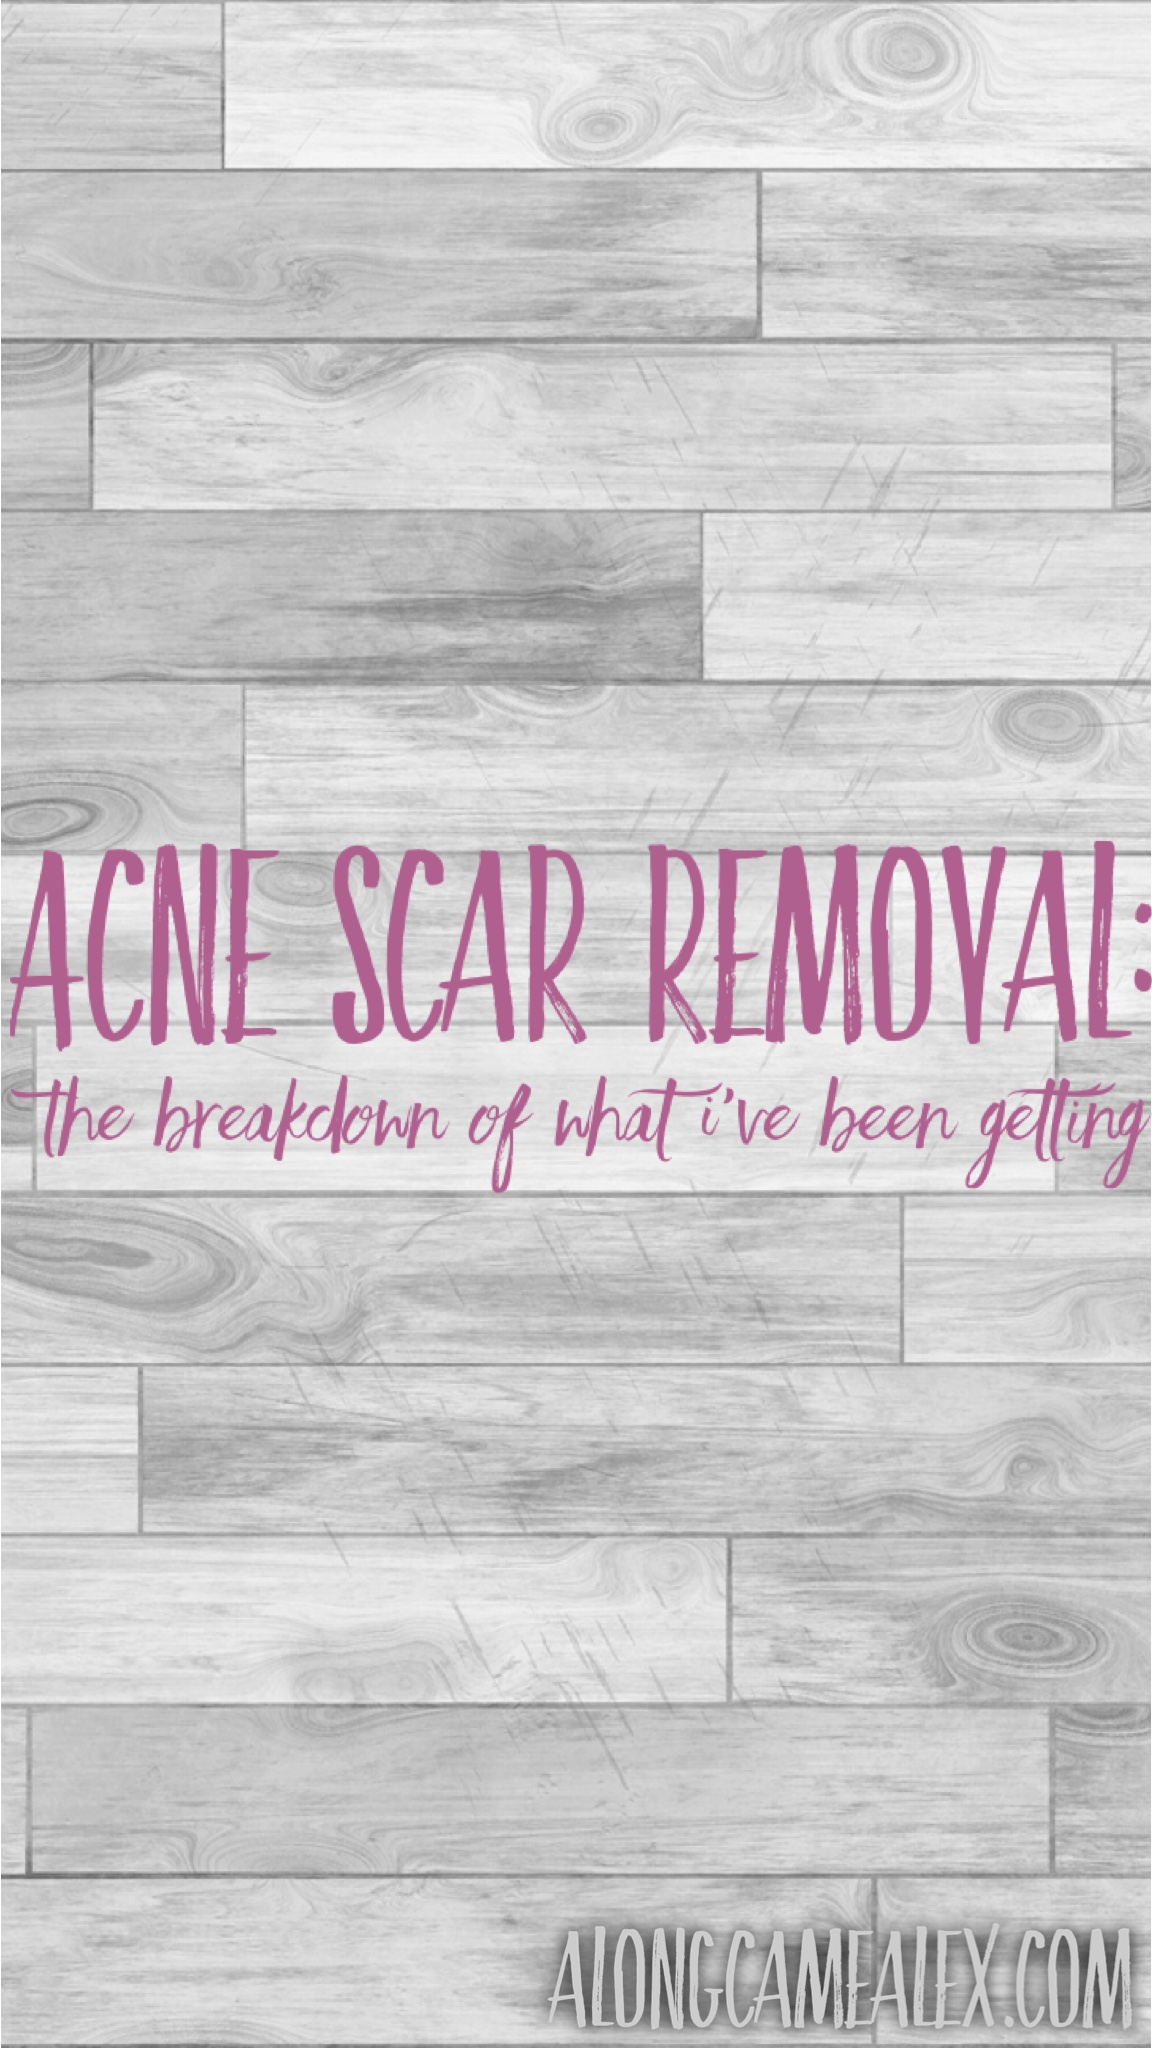 I’ve been getting Korean Acne Scar Laser Treatments!